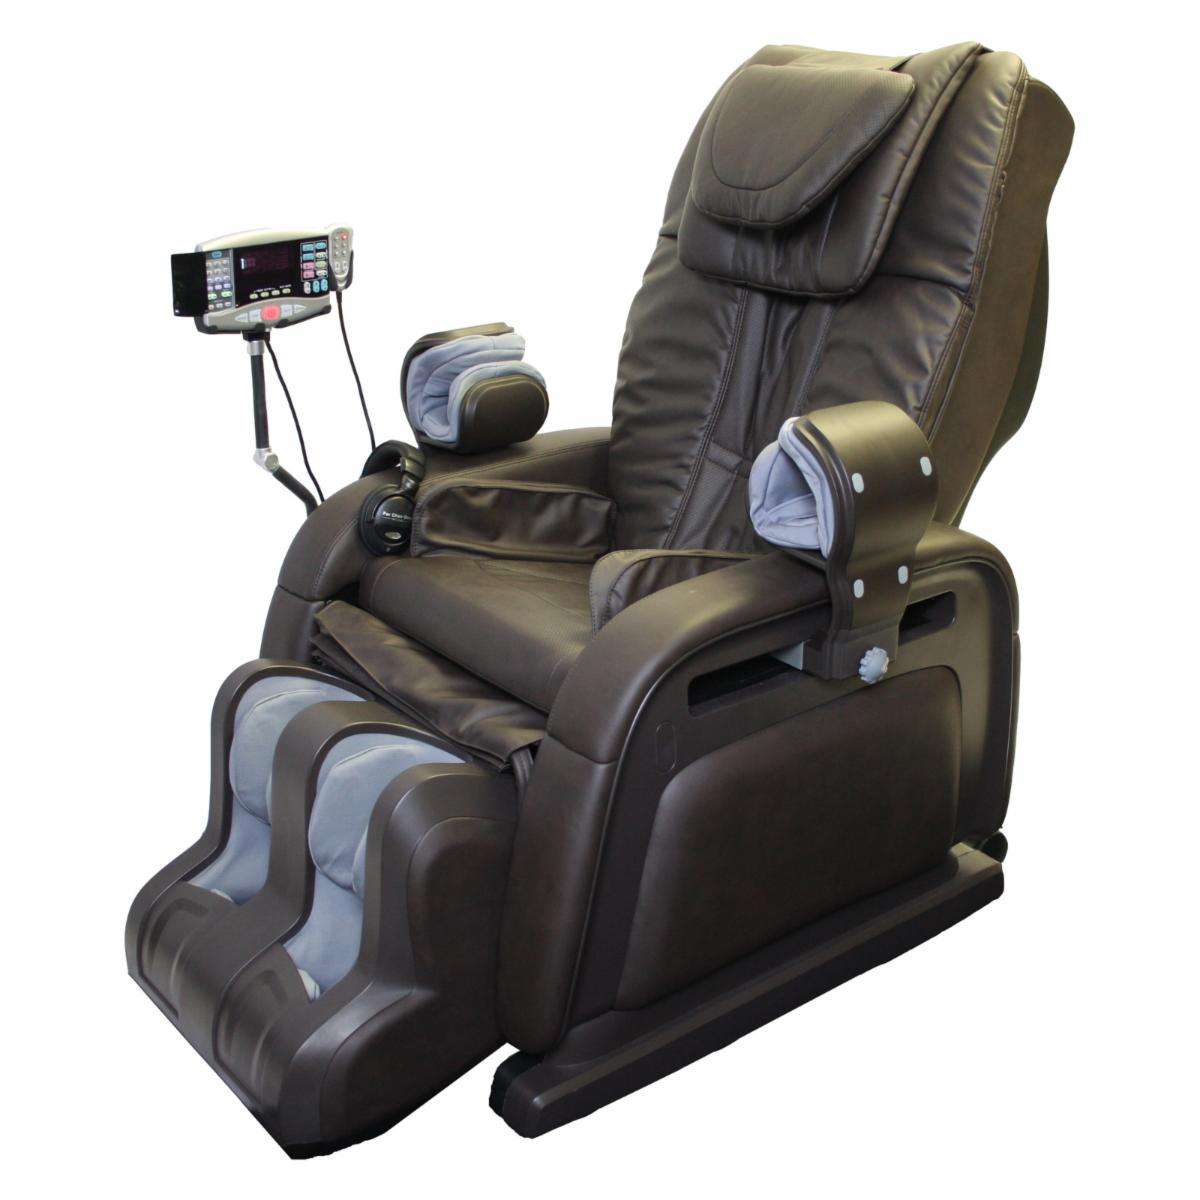 Massage And Heat Recliner Chair: Low Price Zen Awakening ...